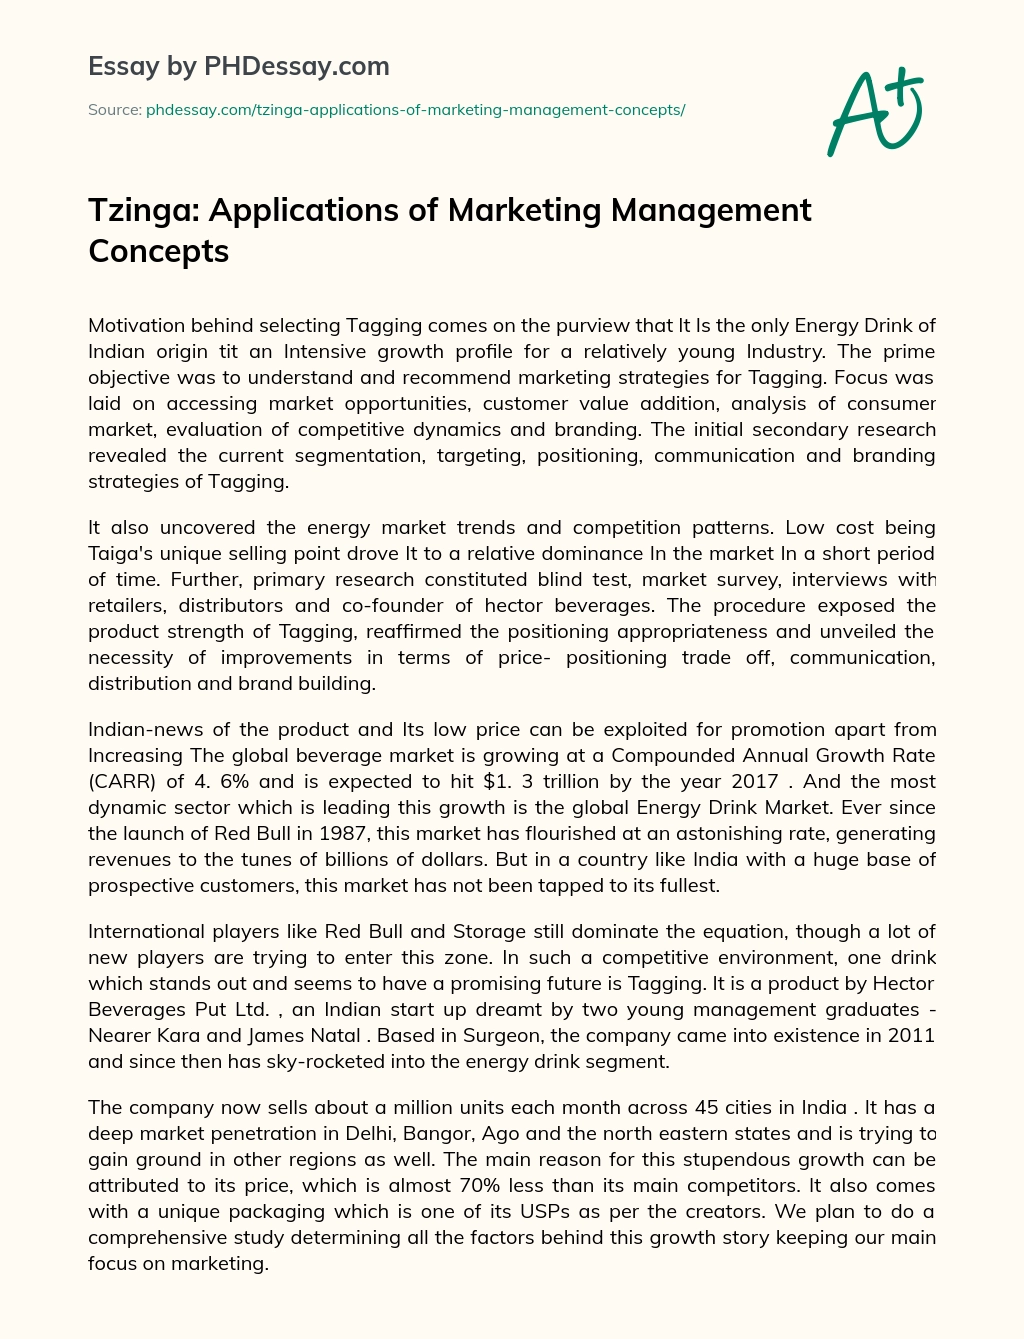 Tzinga: Applications of Marketing Management Concepts essay